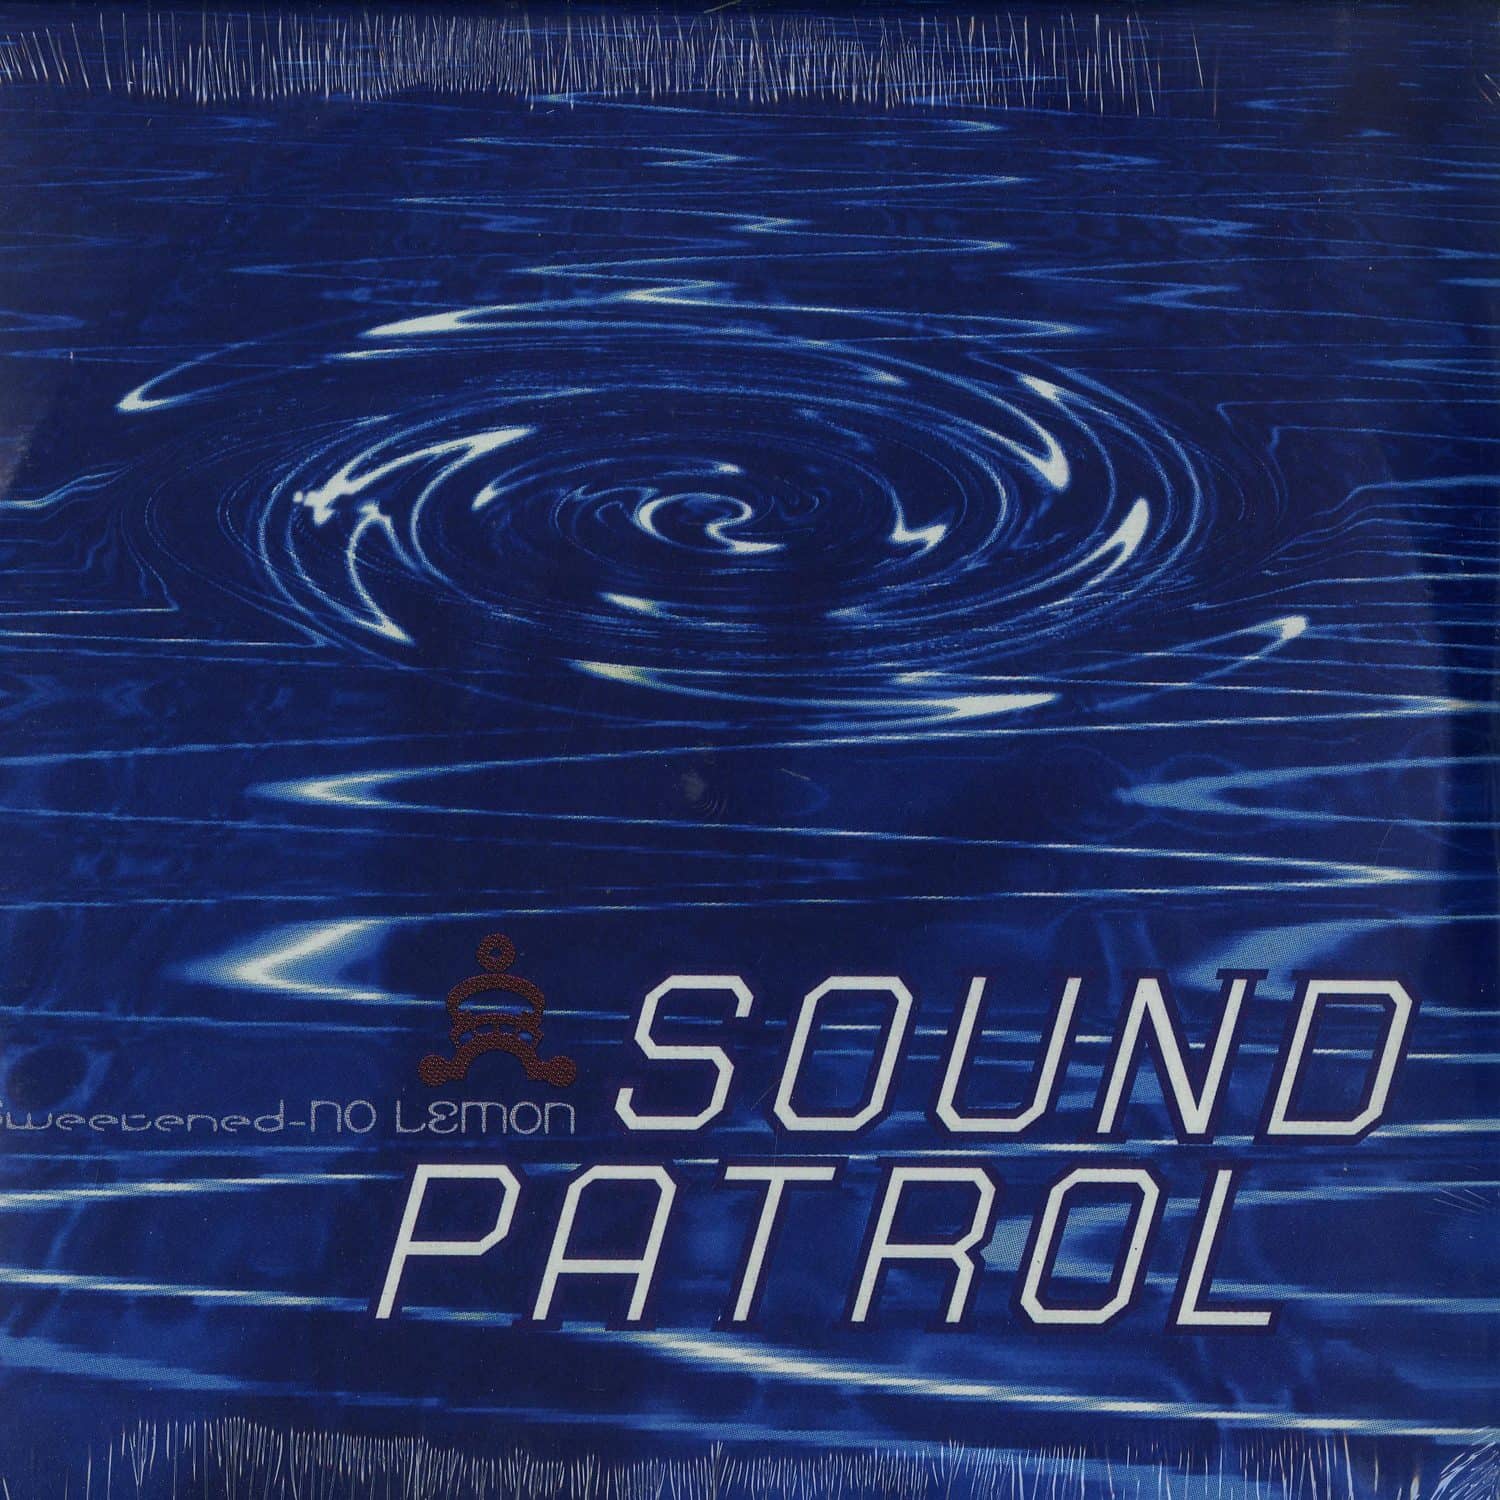 Sound Patrol - SWEETENED NO LEMON - EXPANDED EDITION 